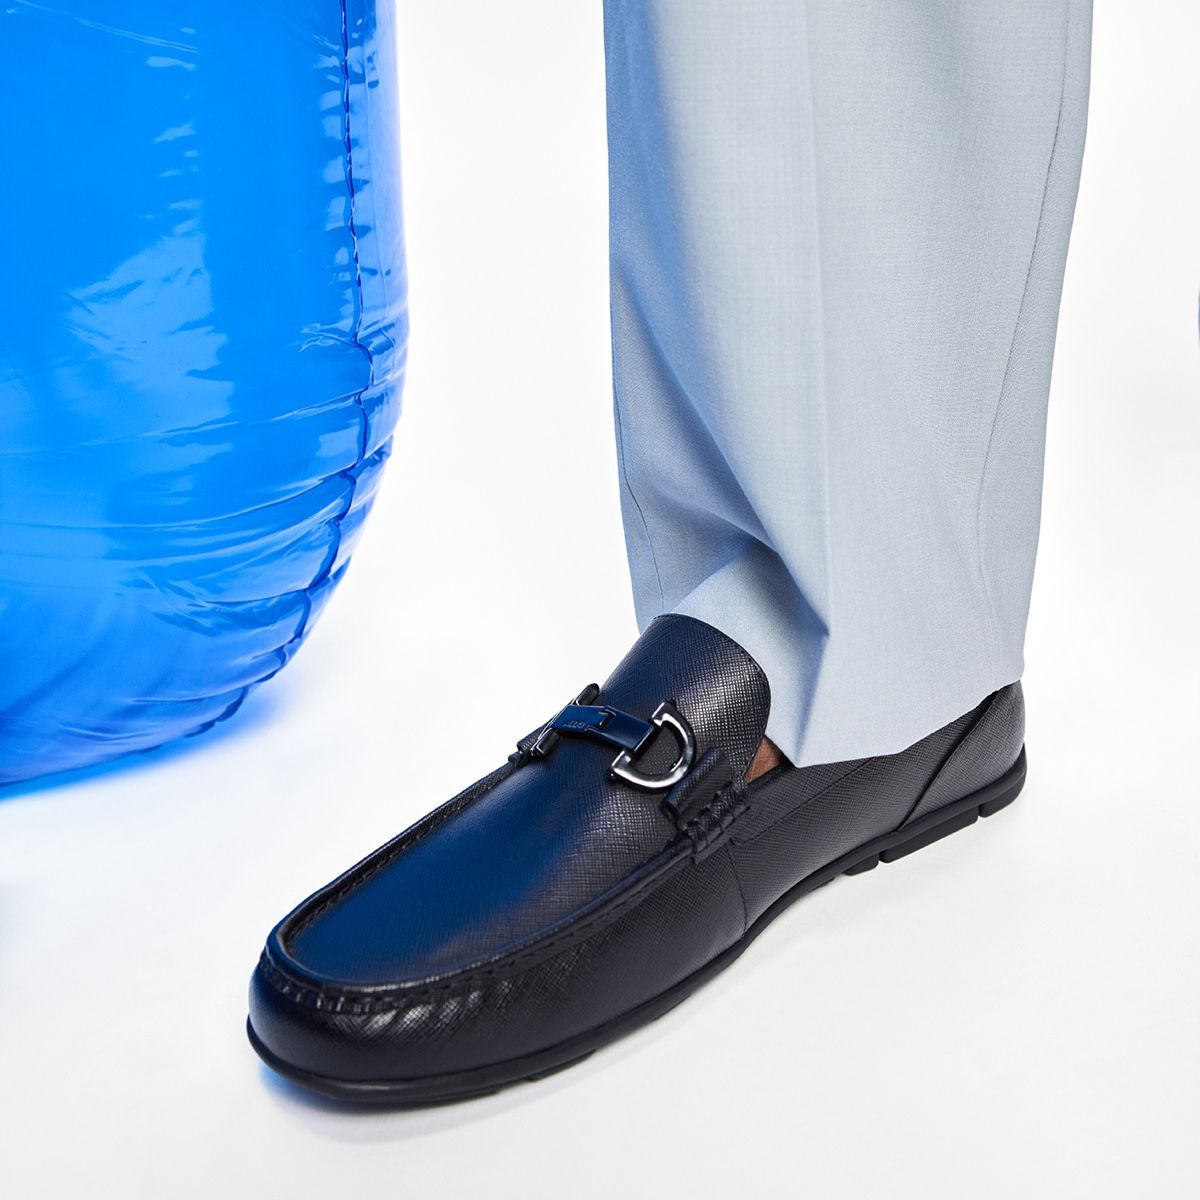 Orlovoflex Open Black Men's Casual Shoes | ALDO Canada